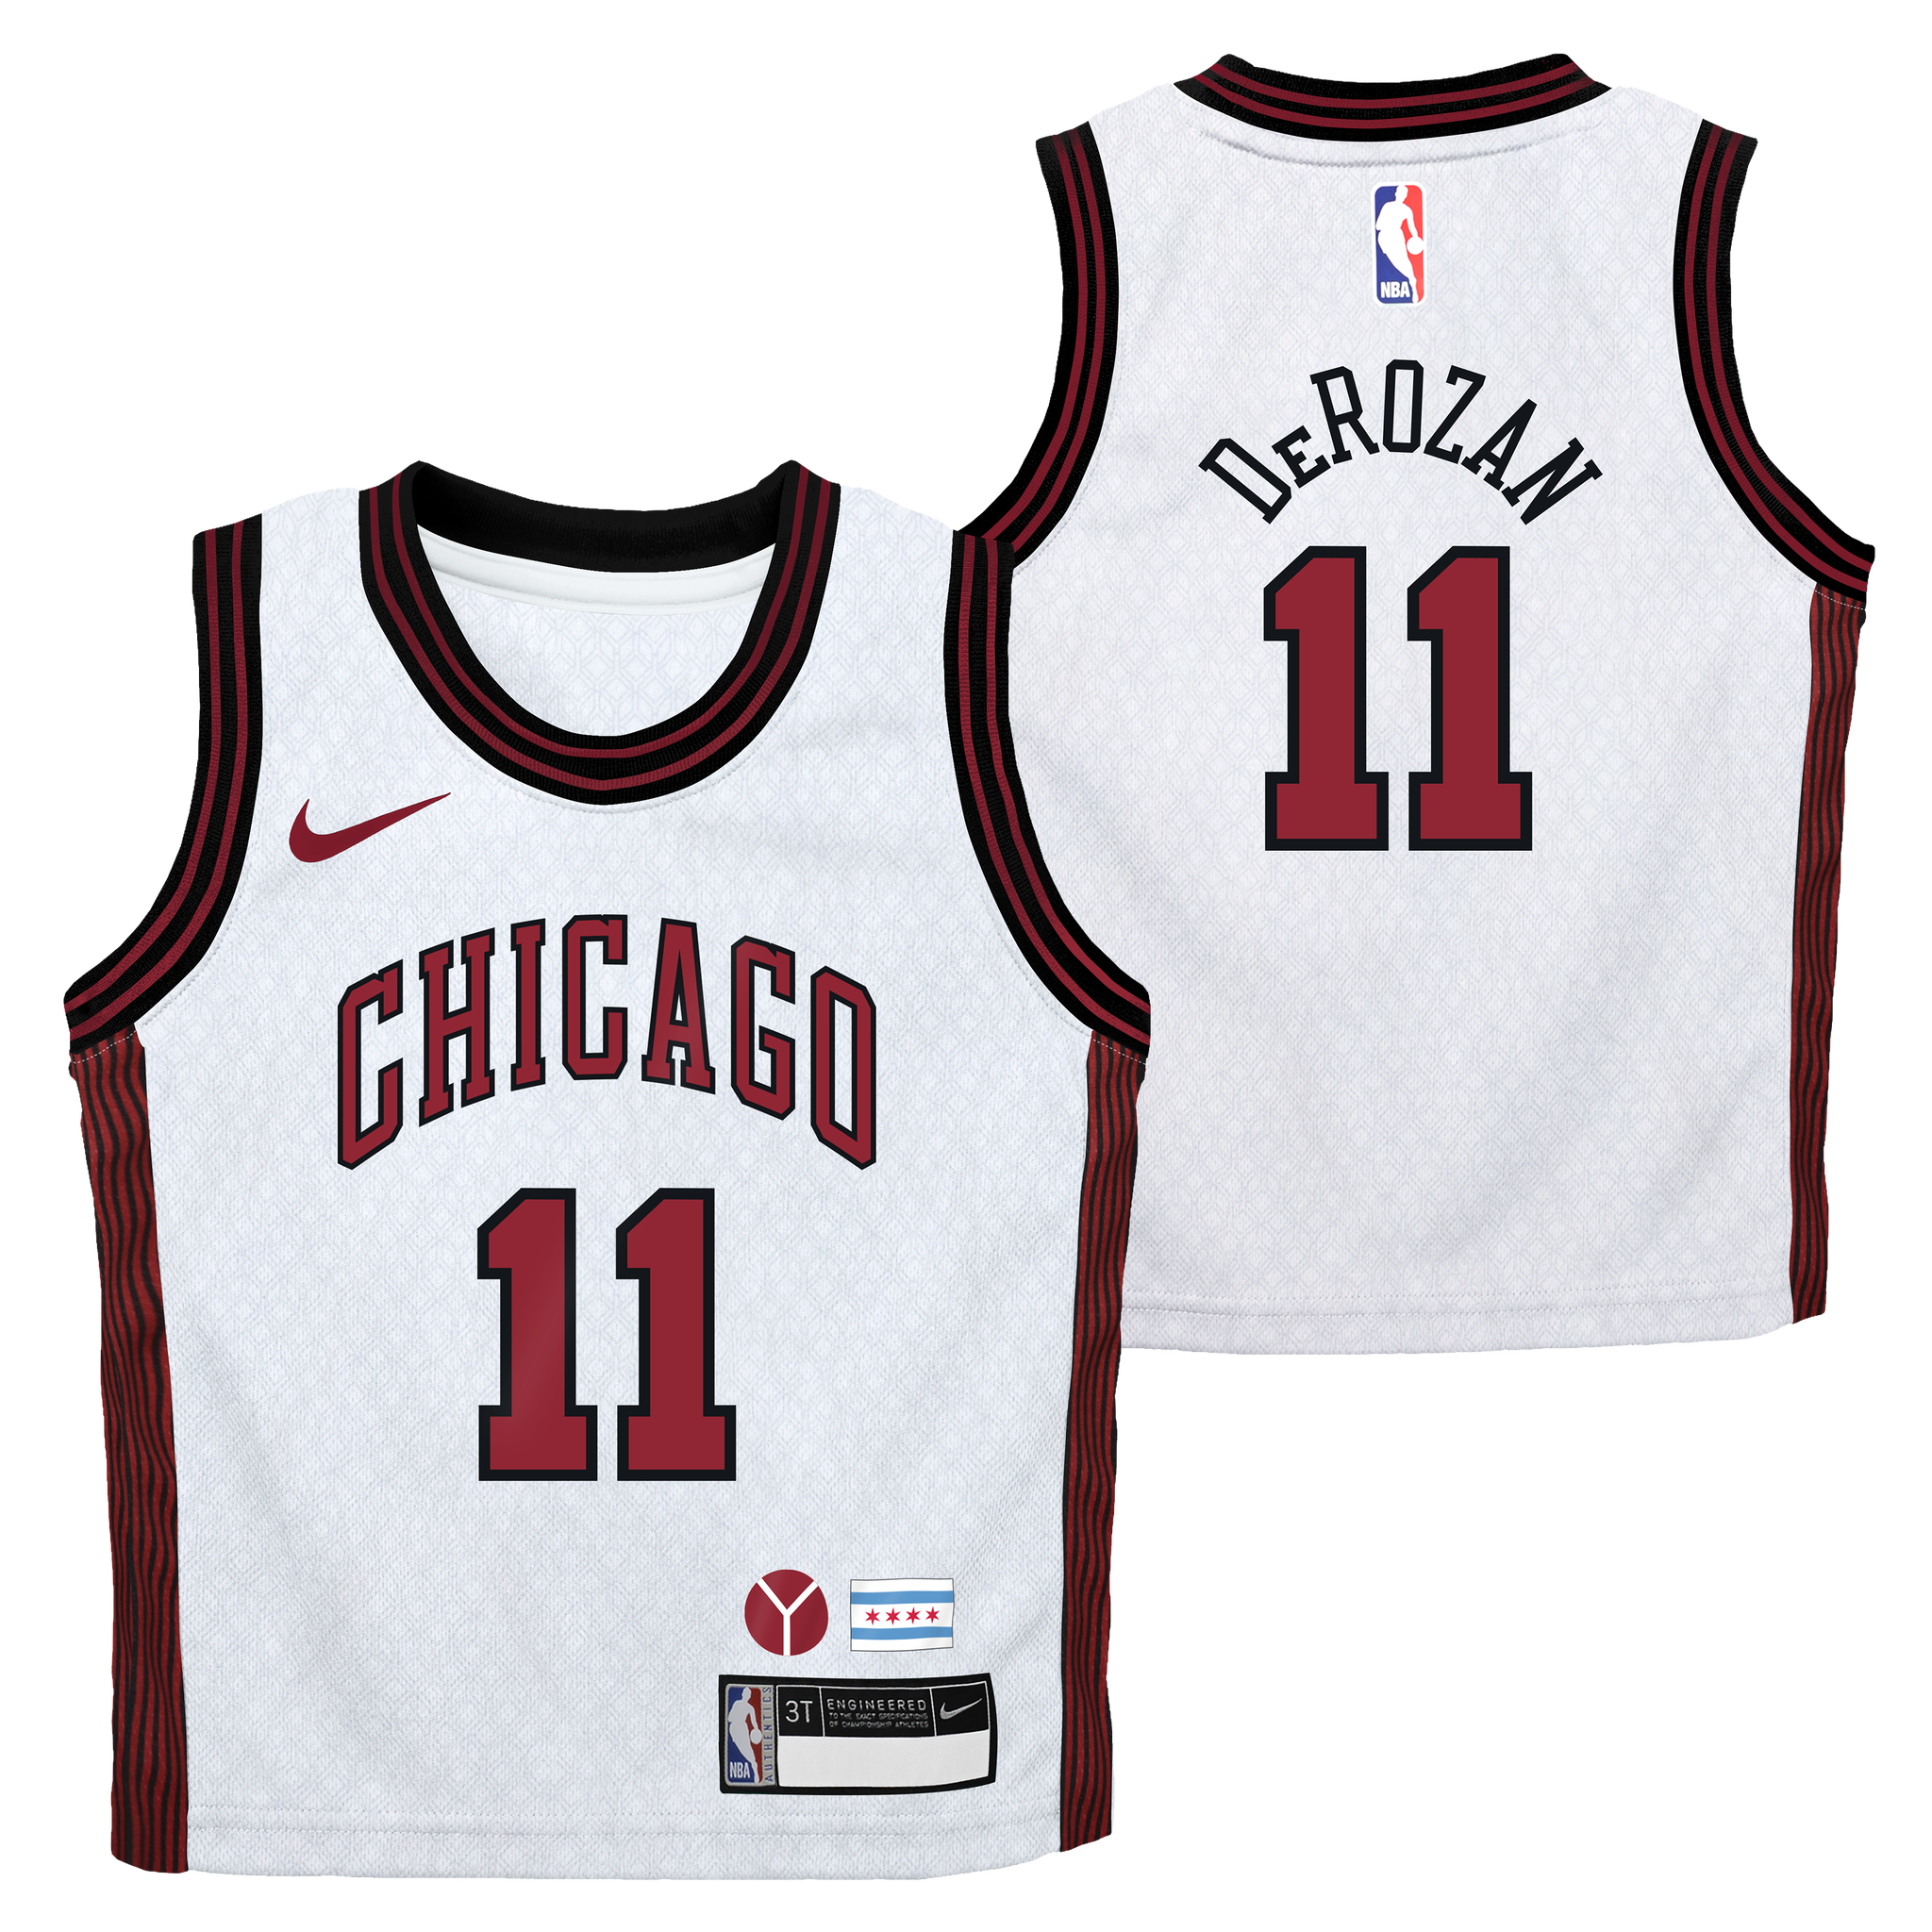 Authentic Demar Derozan Chicago Bulls 22/23 City Edition jersey review 